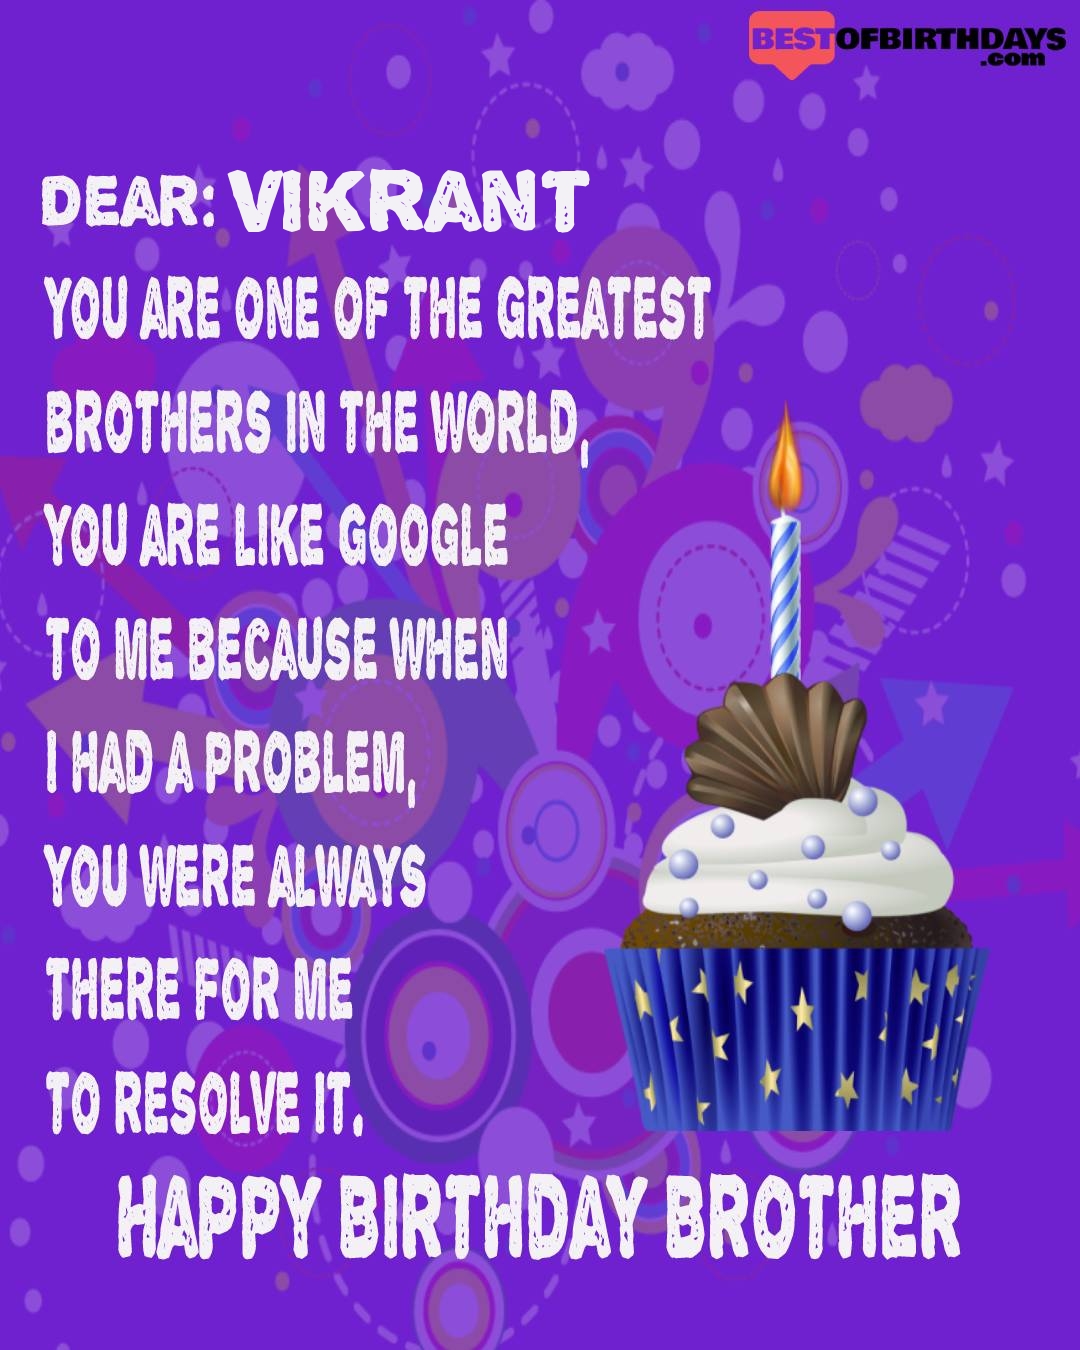 Happy birthday vikrant bhai brother bro